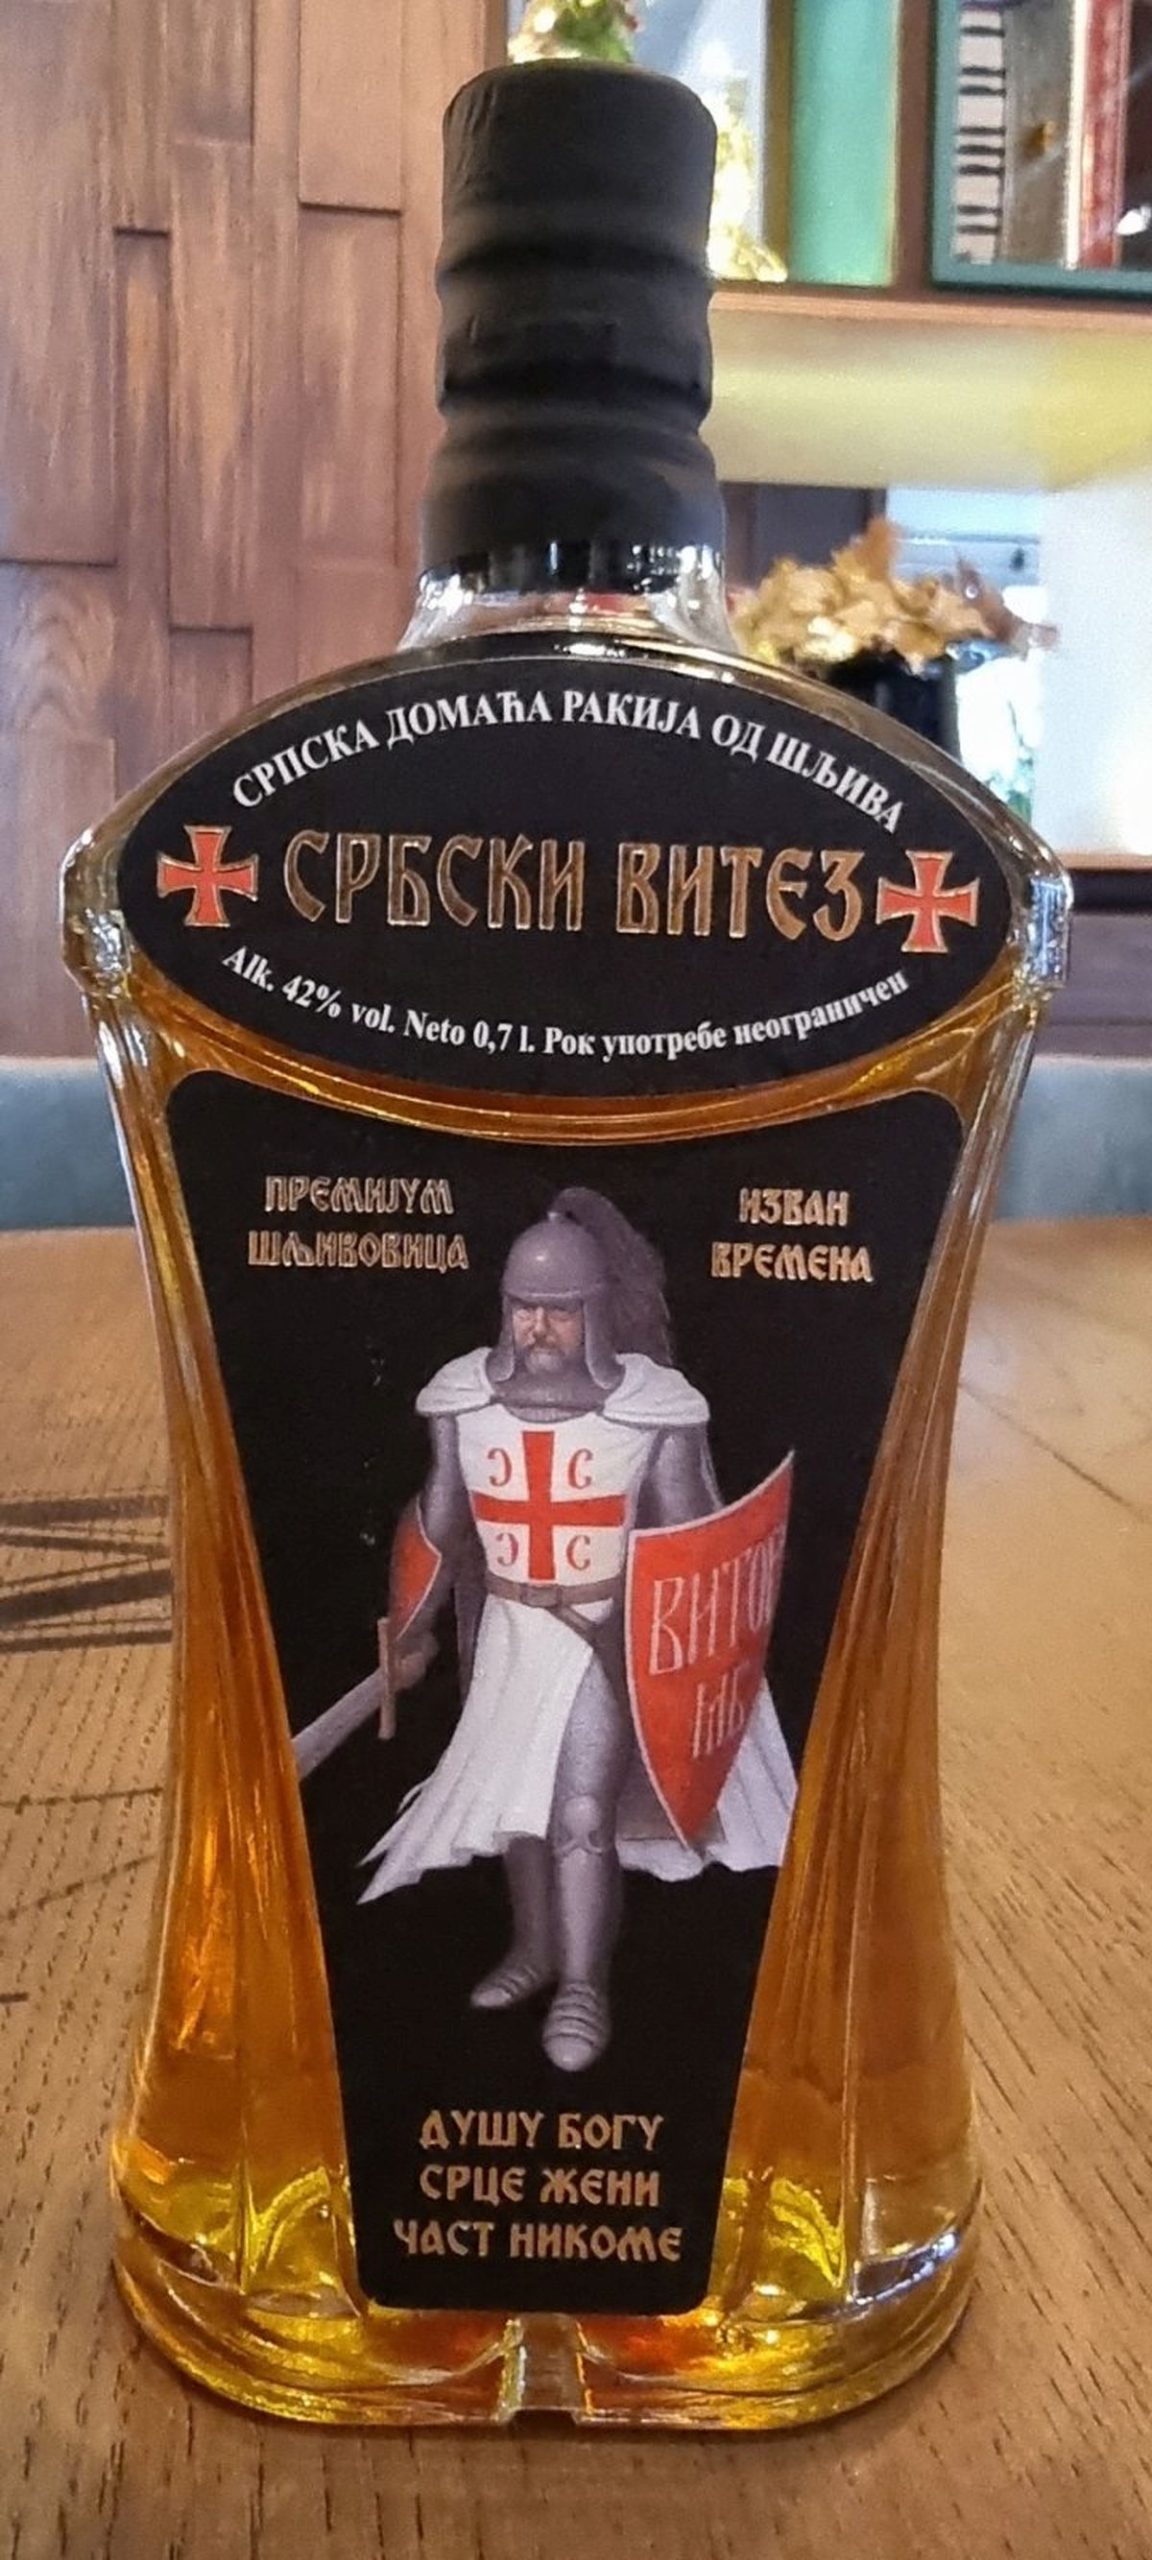  Srbski vitez rakija flaša spreda